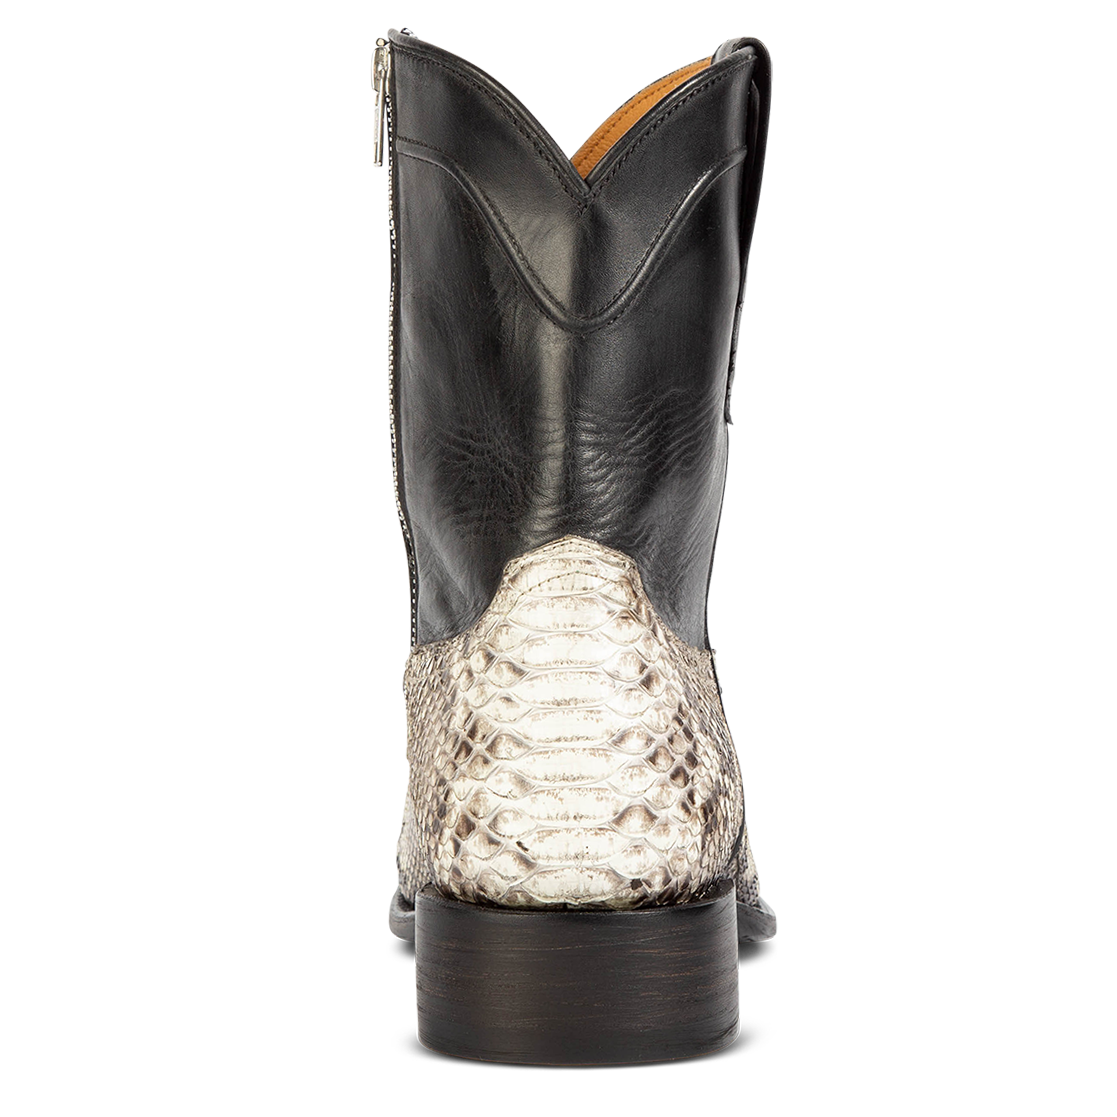 Back view showing low heel on FREEBIRD men's Desperado black/white mid calf boot